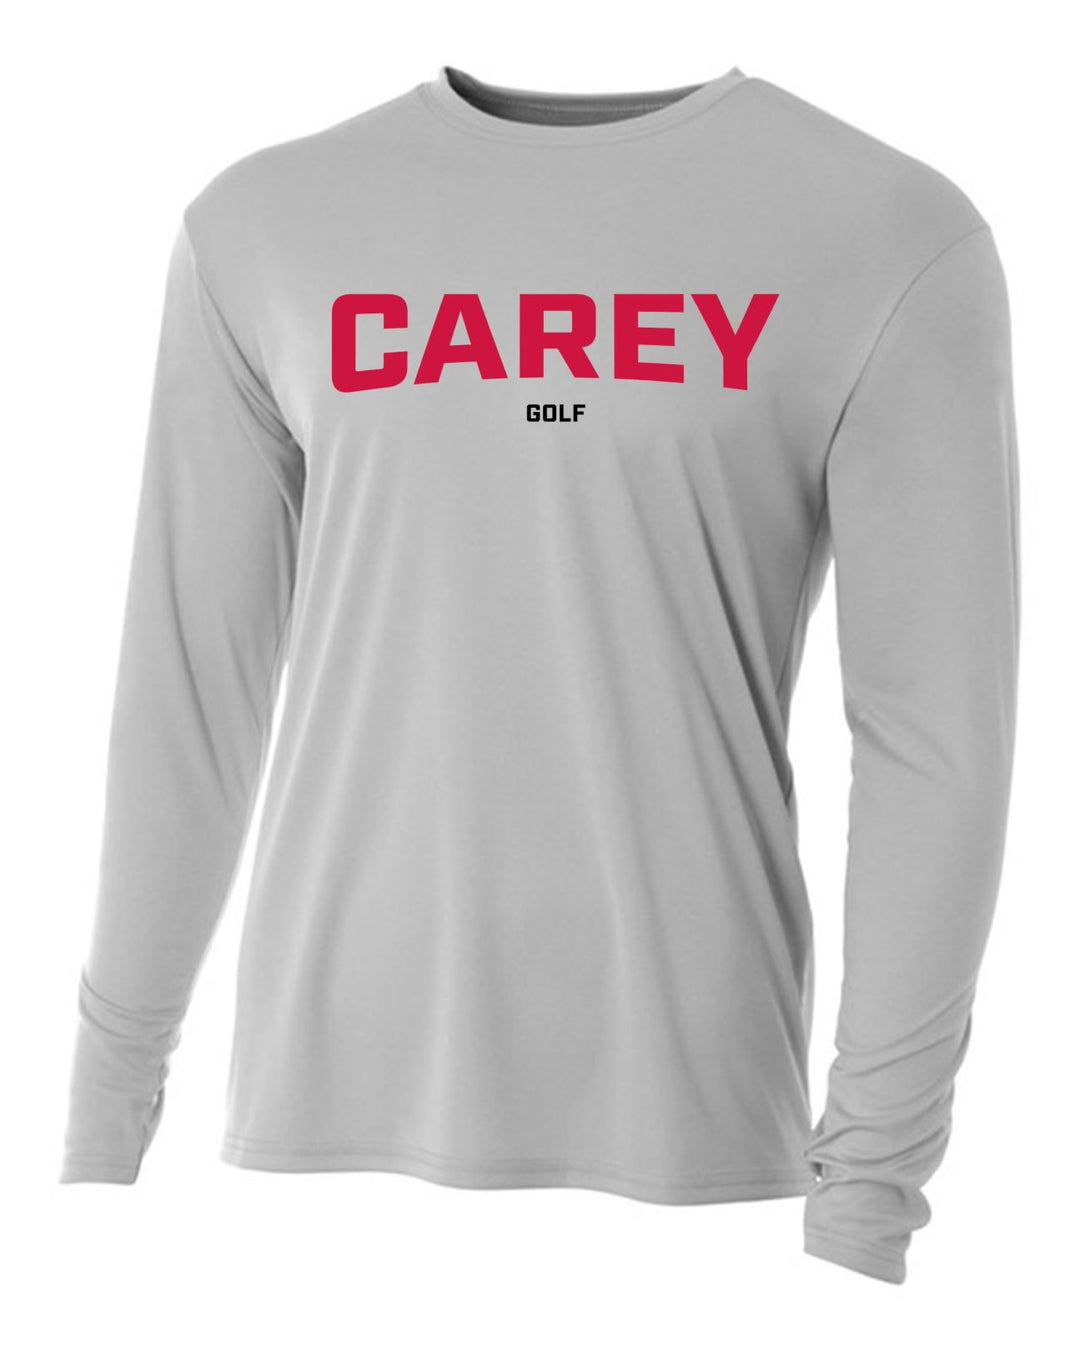 WCU Golf Men's Long-Sleeve Performance Shirt WCU Golf Silver CAREY - Third Coast Soccer